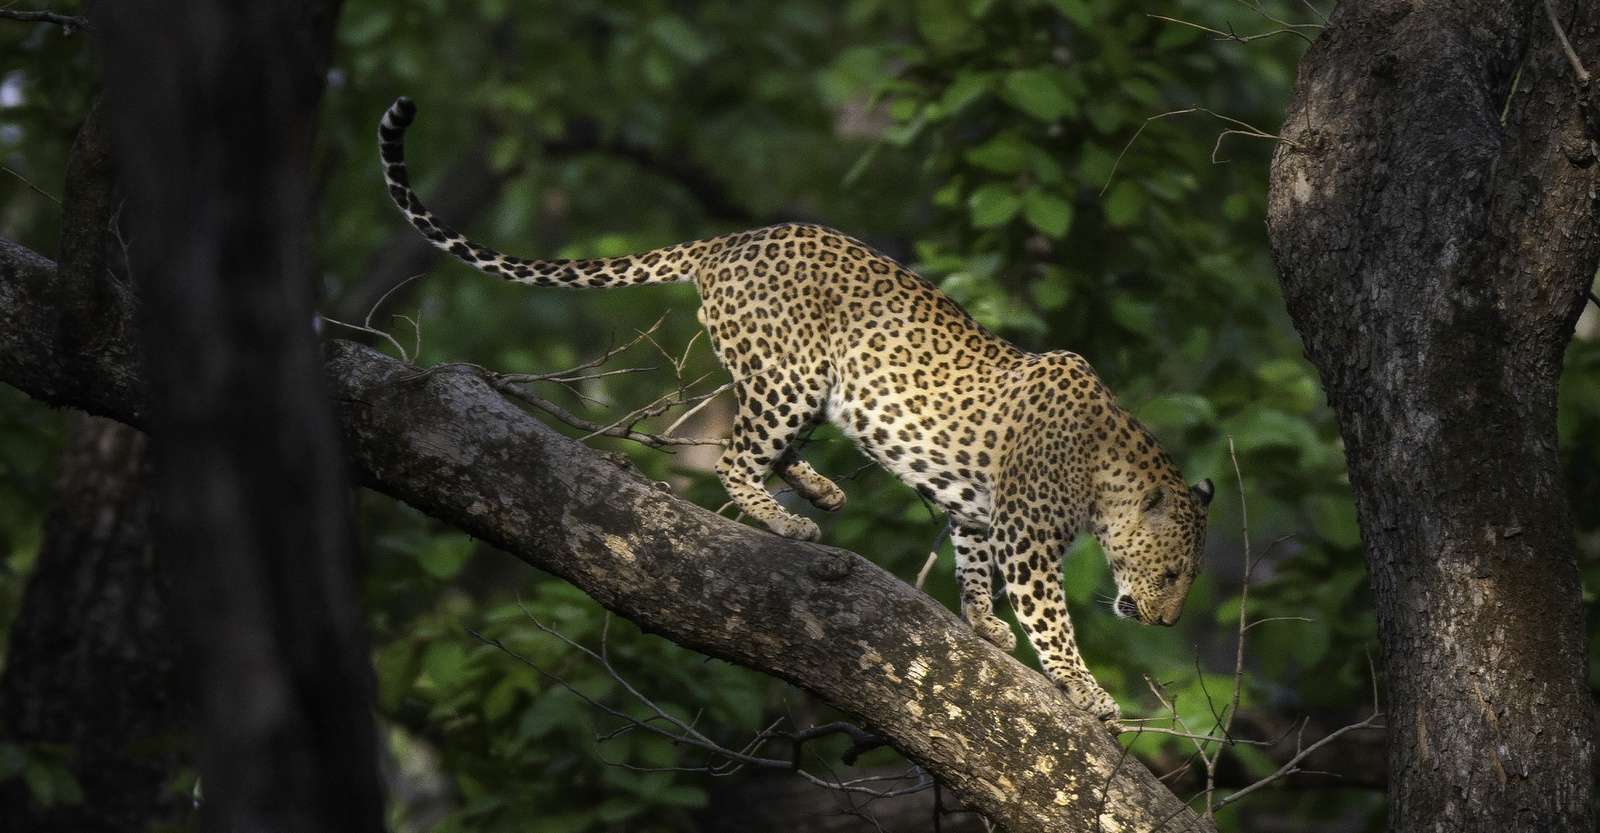 Leopard, Jhalana Leopard Reserve, India.